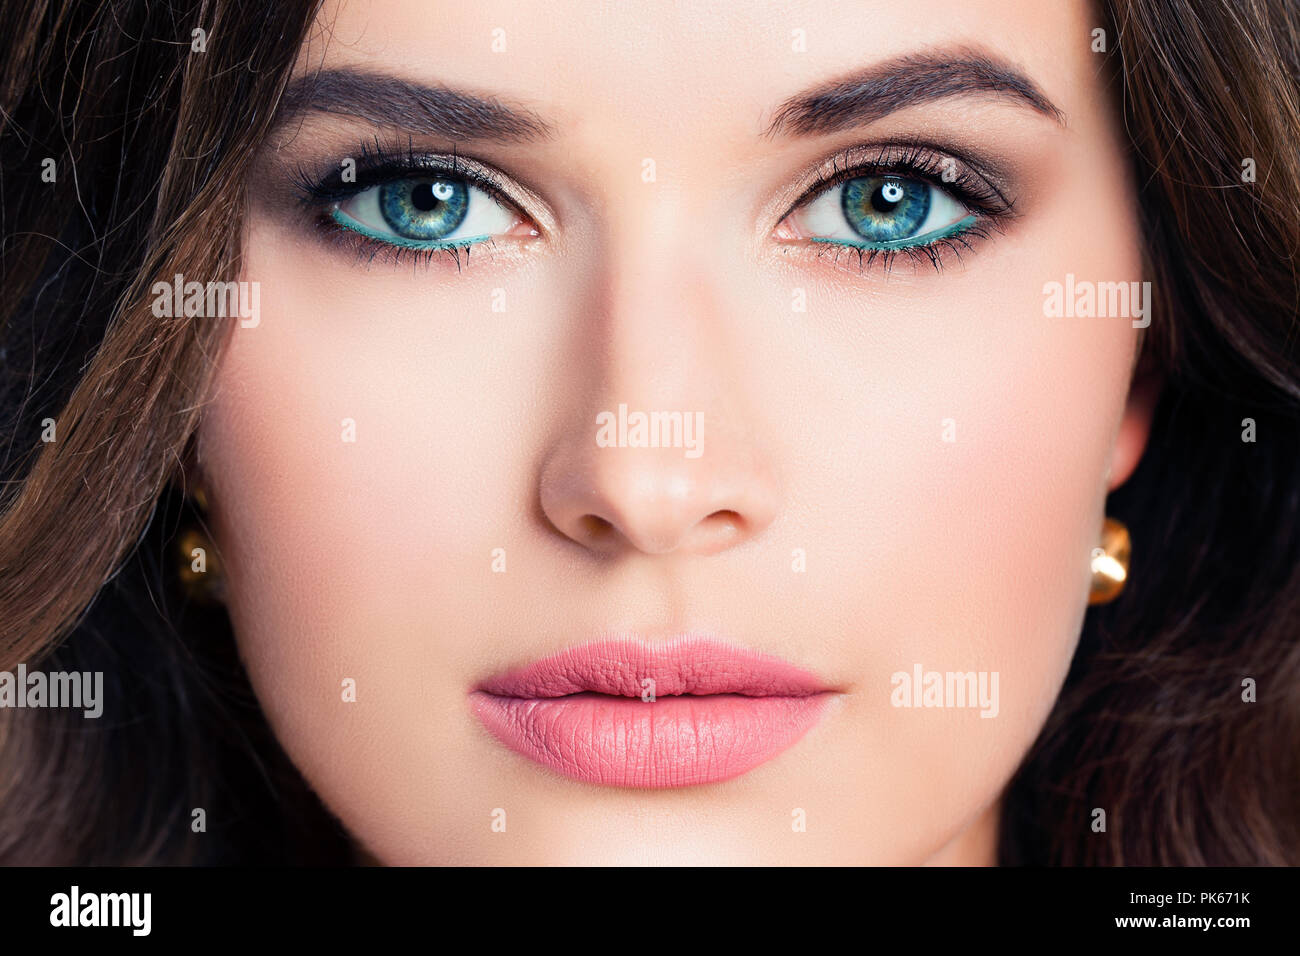 Woman Face Closeup Beautiful Female Model With Makeup Blue Eye Shadow Pink Lipstick Stock Photo Alamy